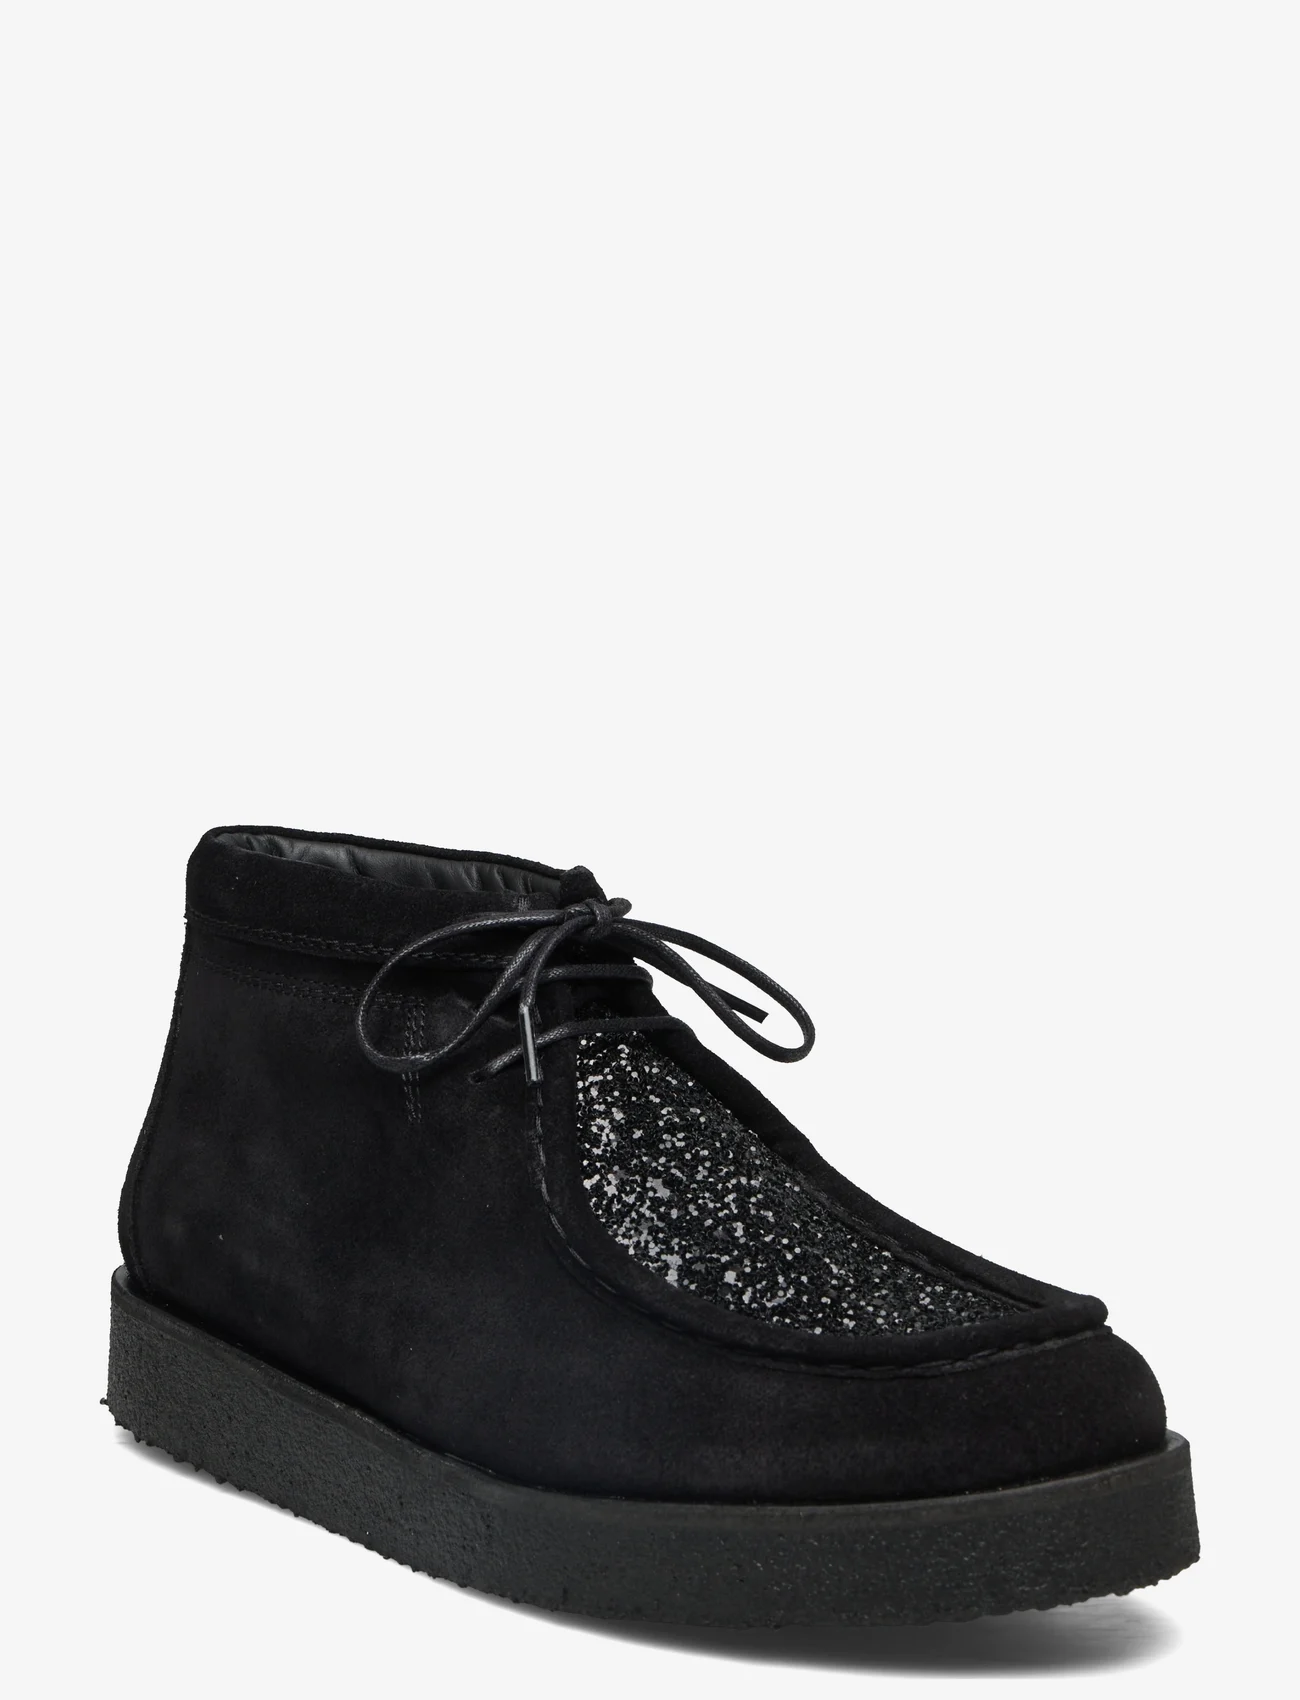 ANGULUS - Shoes - flat - with lace - kävelykengät - 1163/2486 black/black glitter - 0